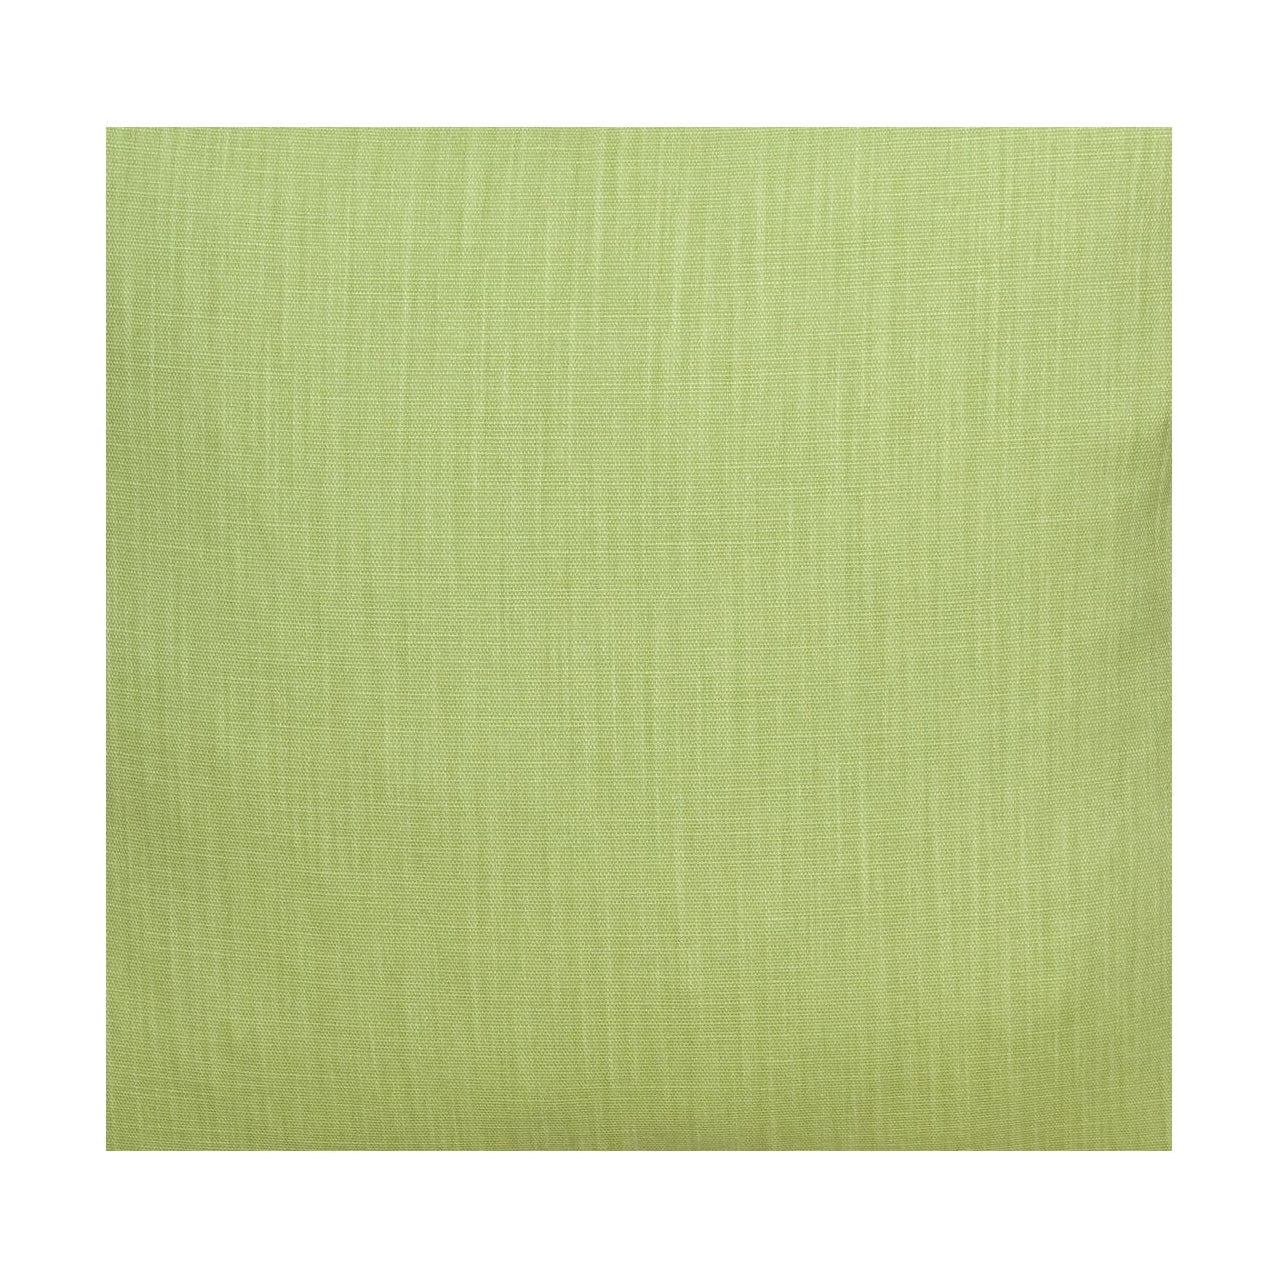 Spira Klotz Fabric Width 150 Cm (Price Per Meter), Light Green